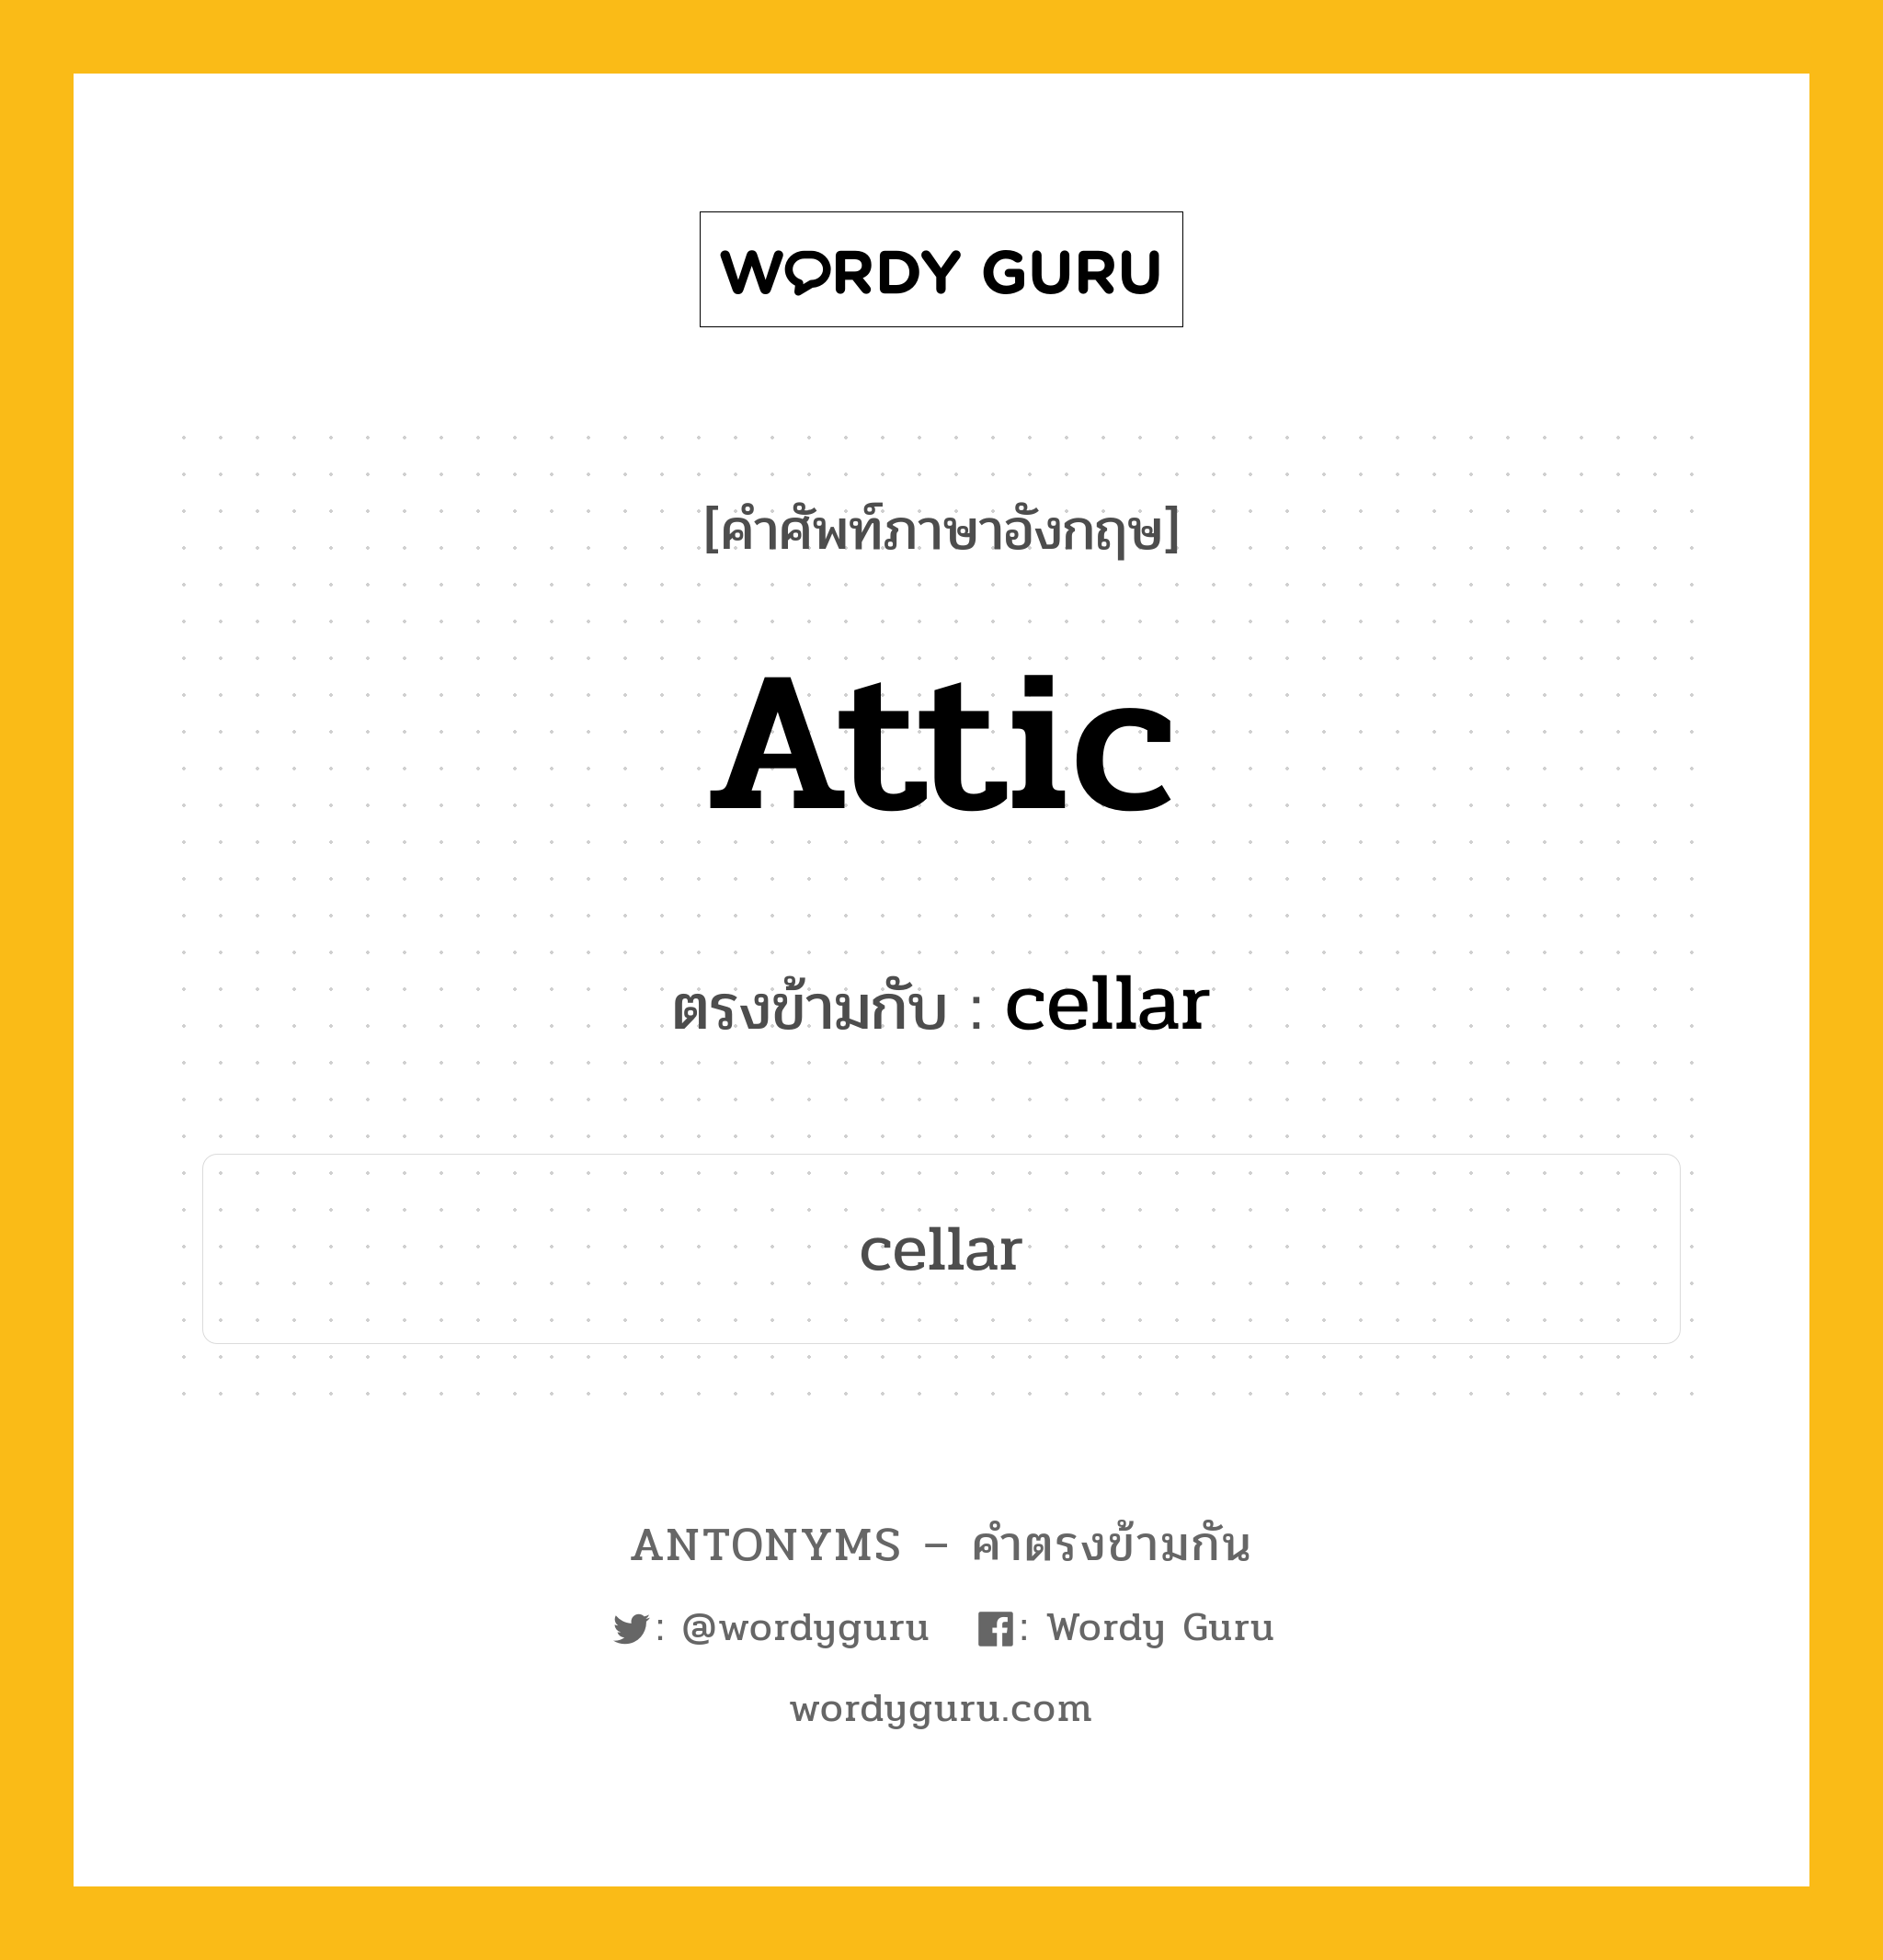 attic เป็นคำตรงข้ามกับคำไหนบ้าง?, คำศัพท์ภาษาอังกฤษ attic ตรงข้ามกับ cellar หมวด cellar